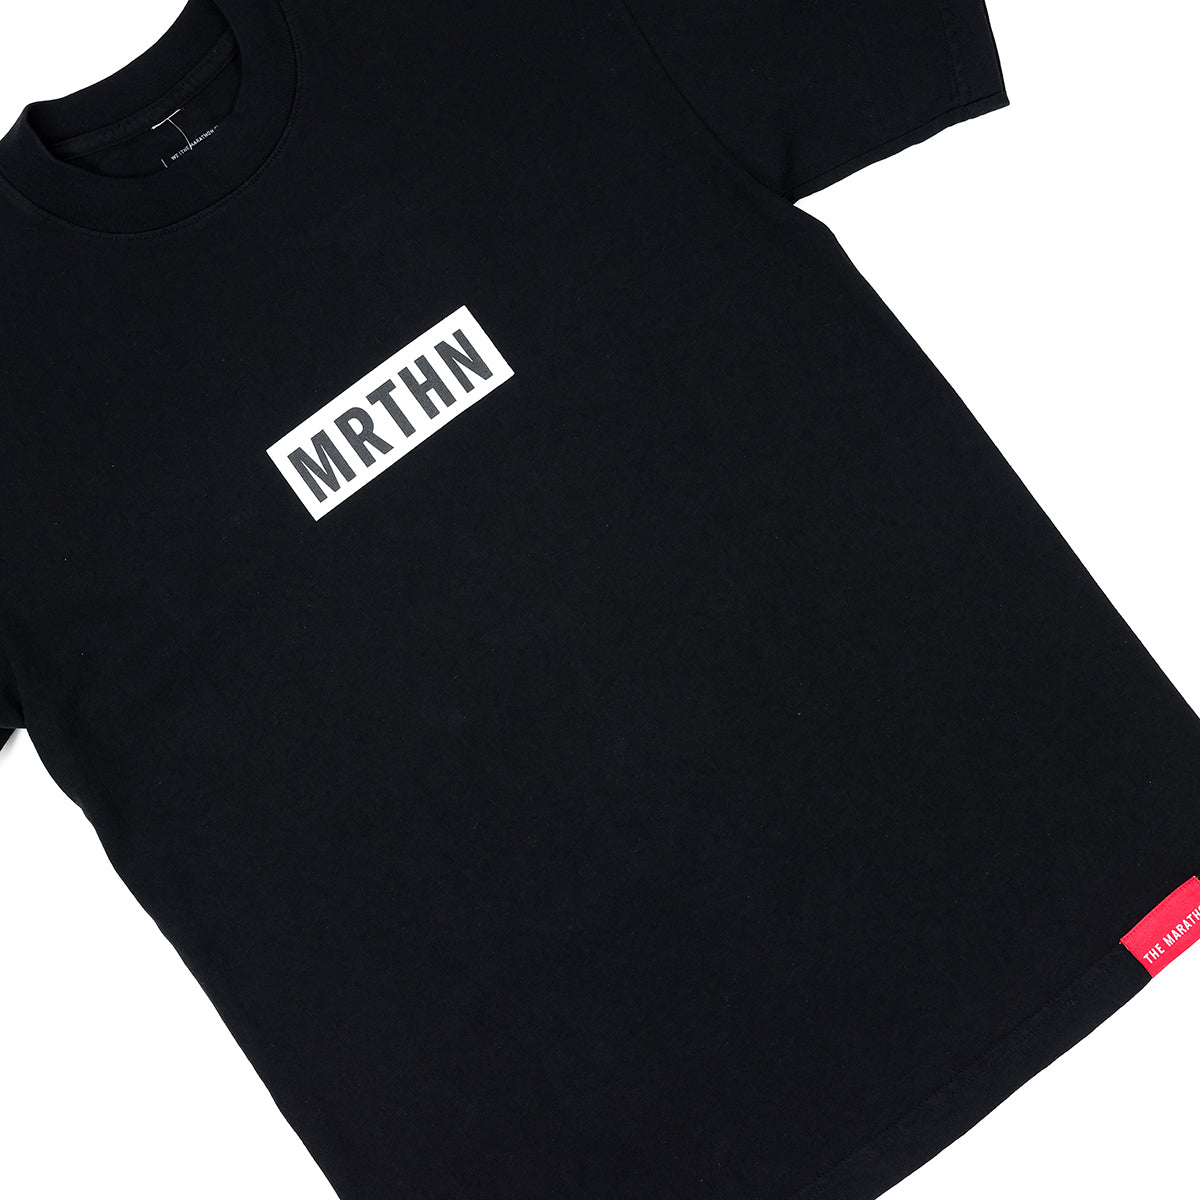 MRTHN T-shirt - Black/White - Detail